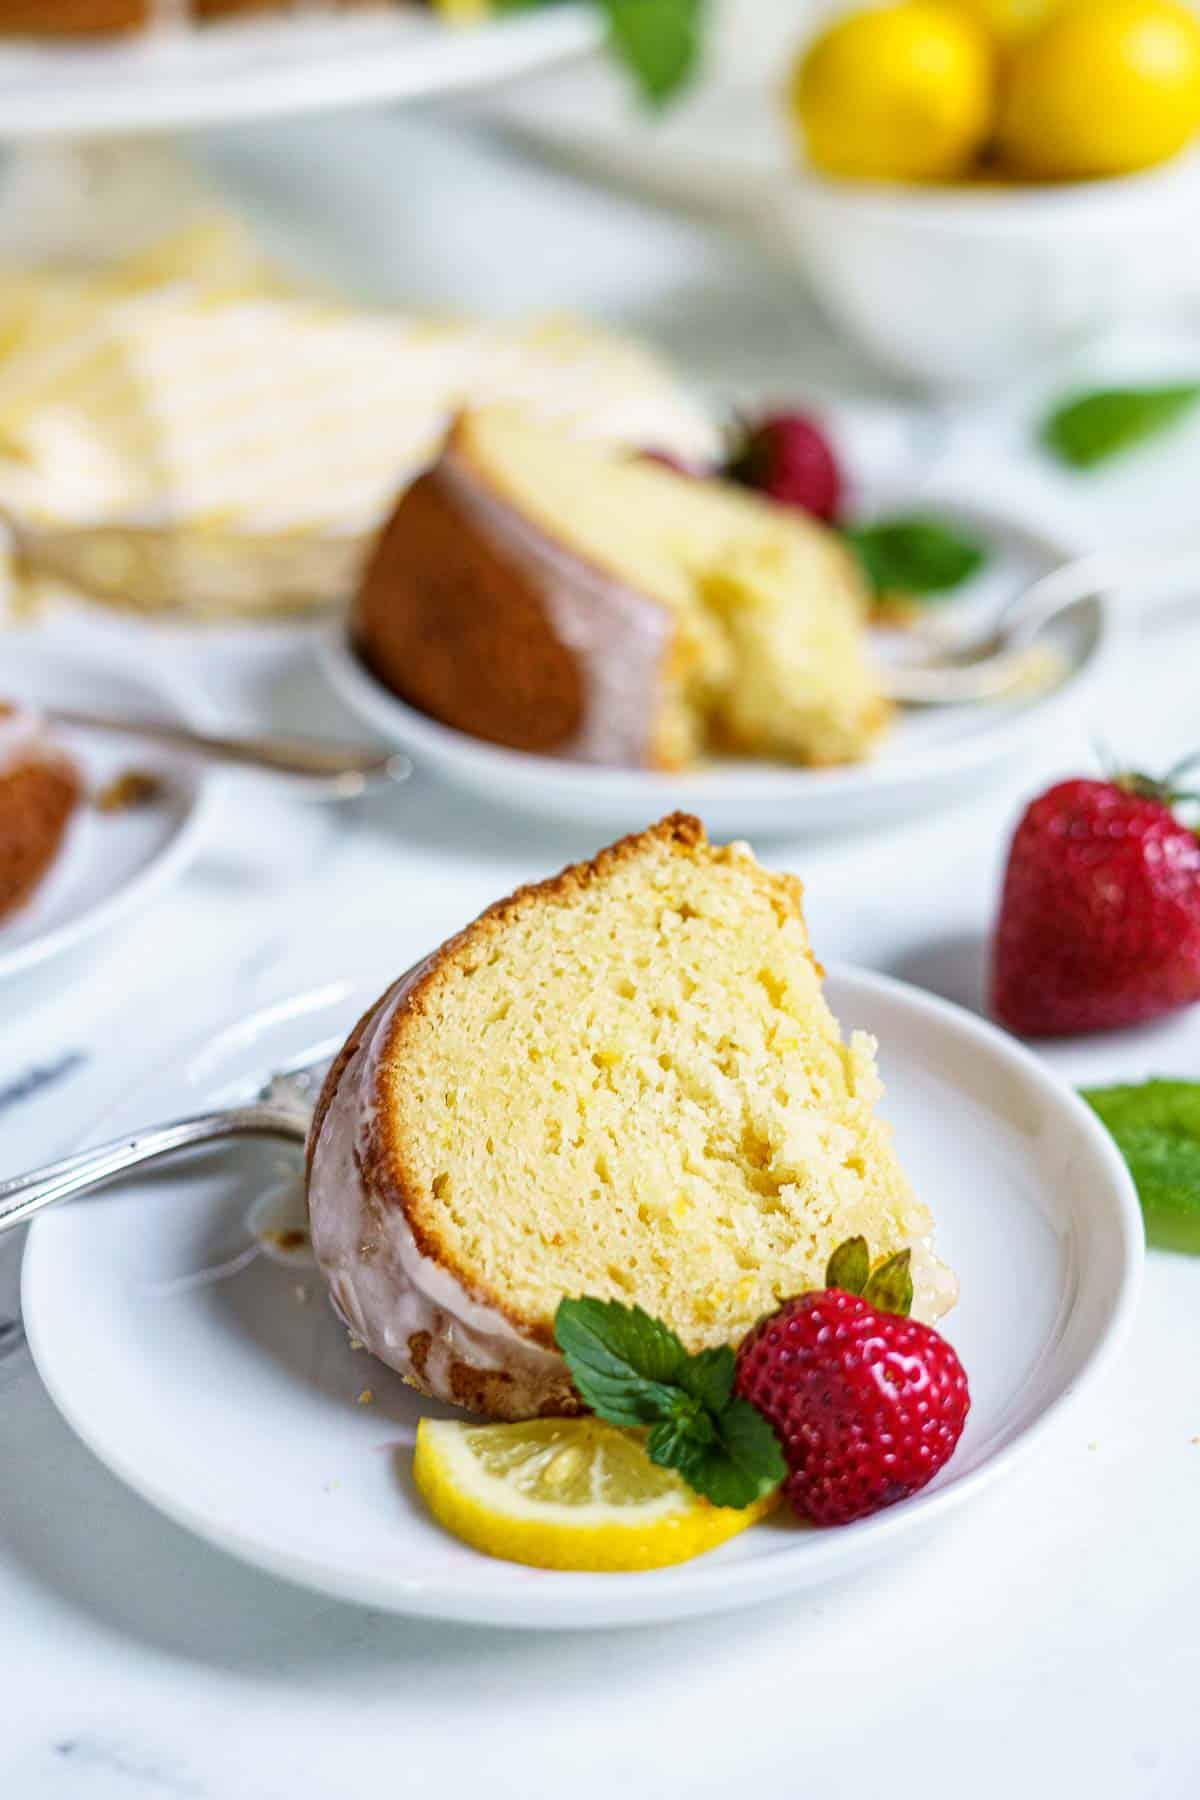 slice of lemon cake on plate with strawberries